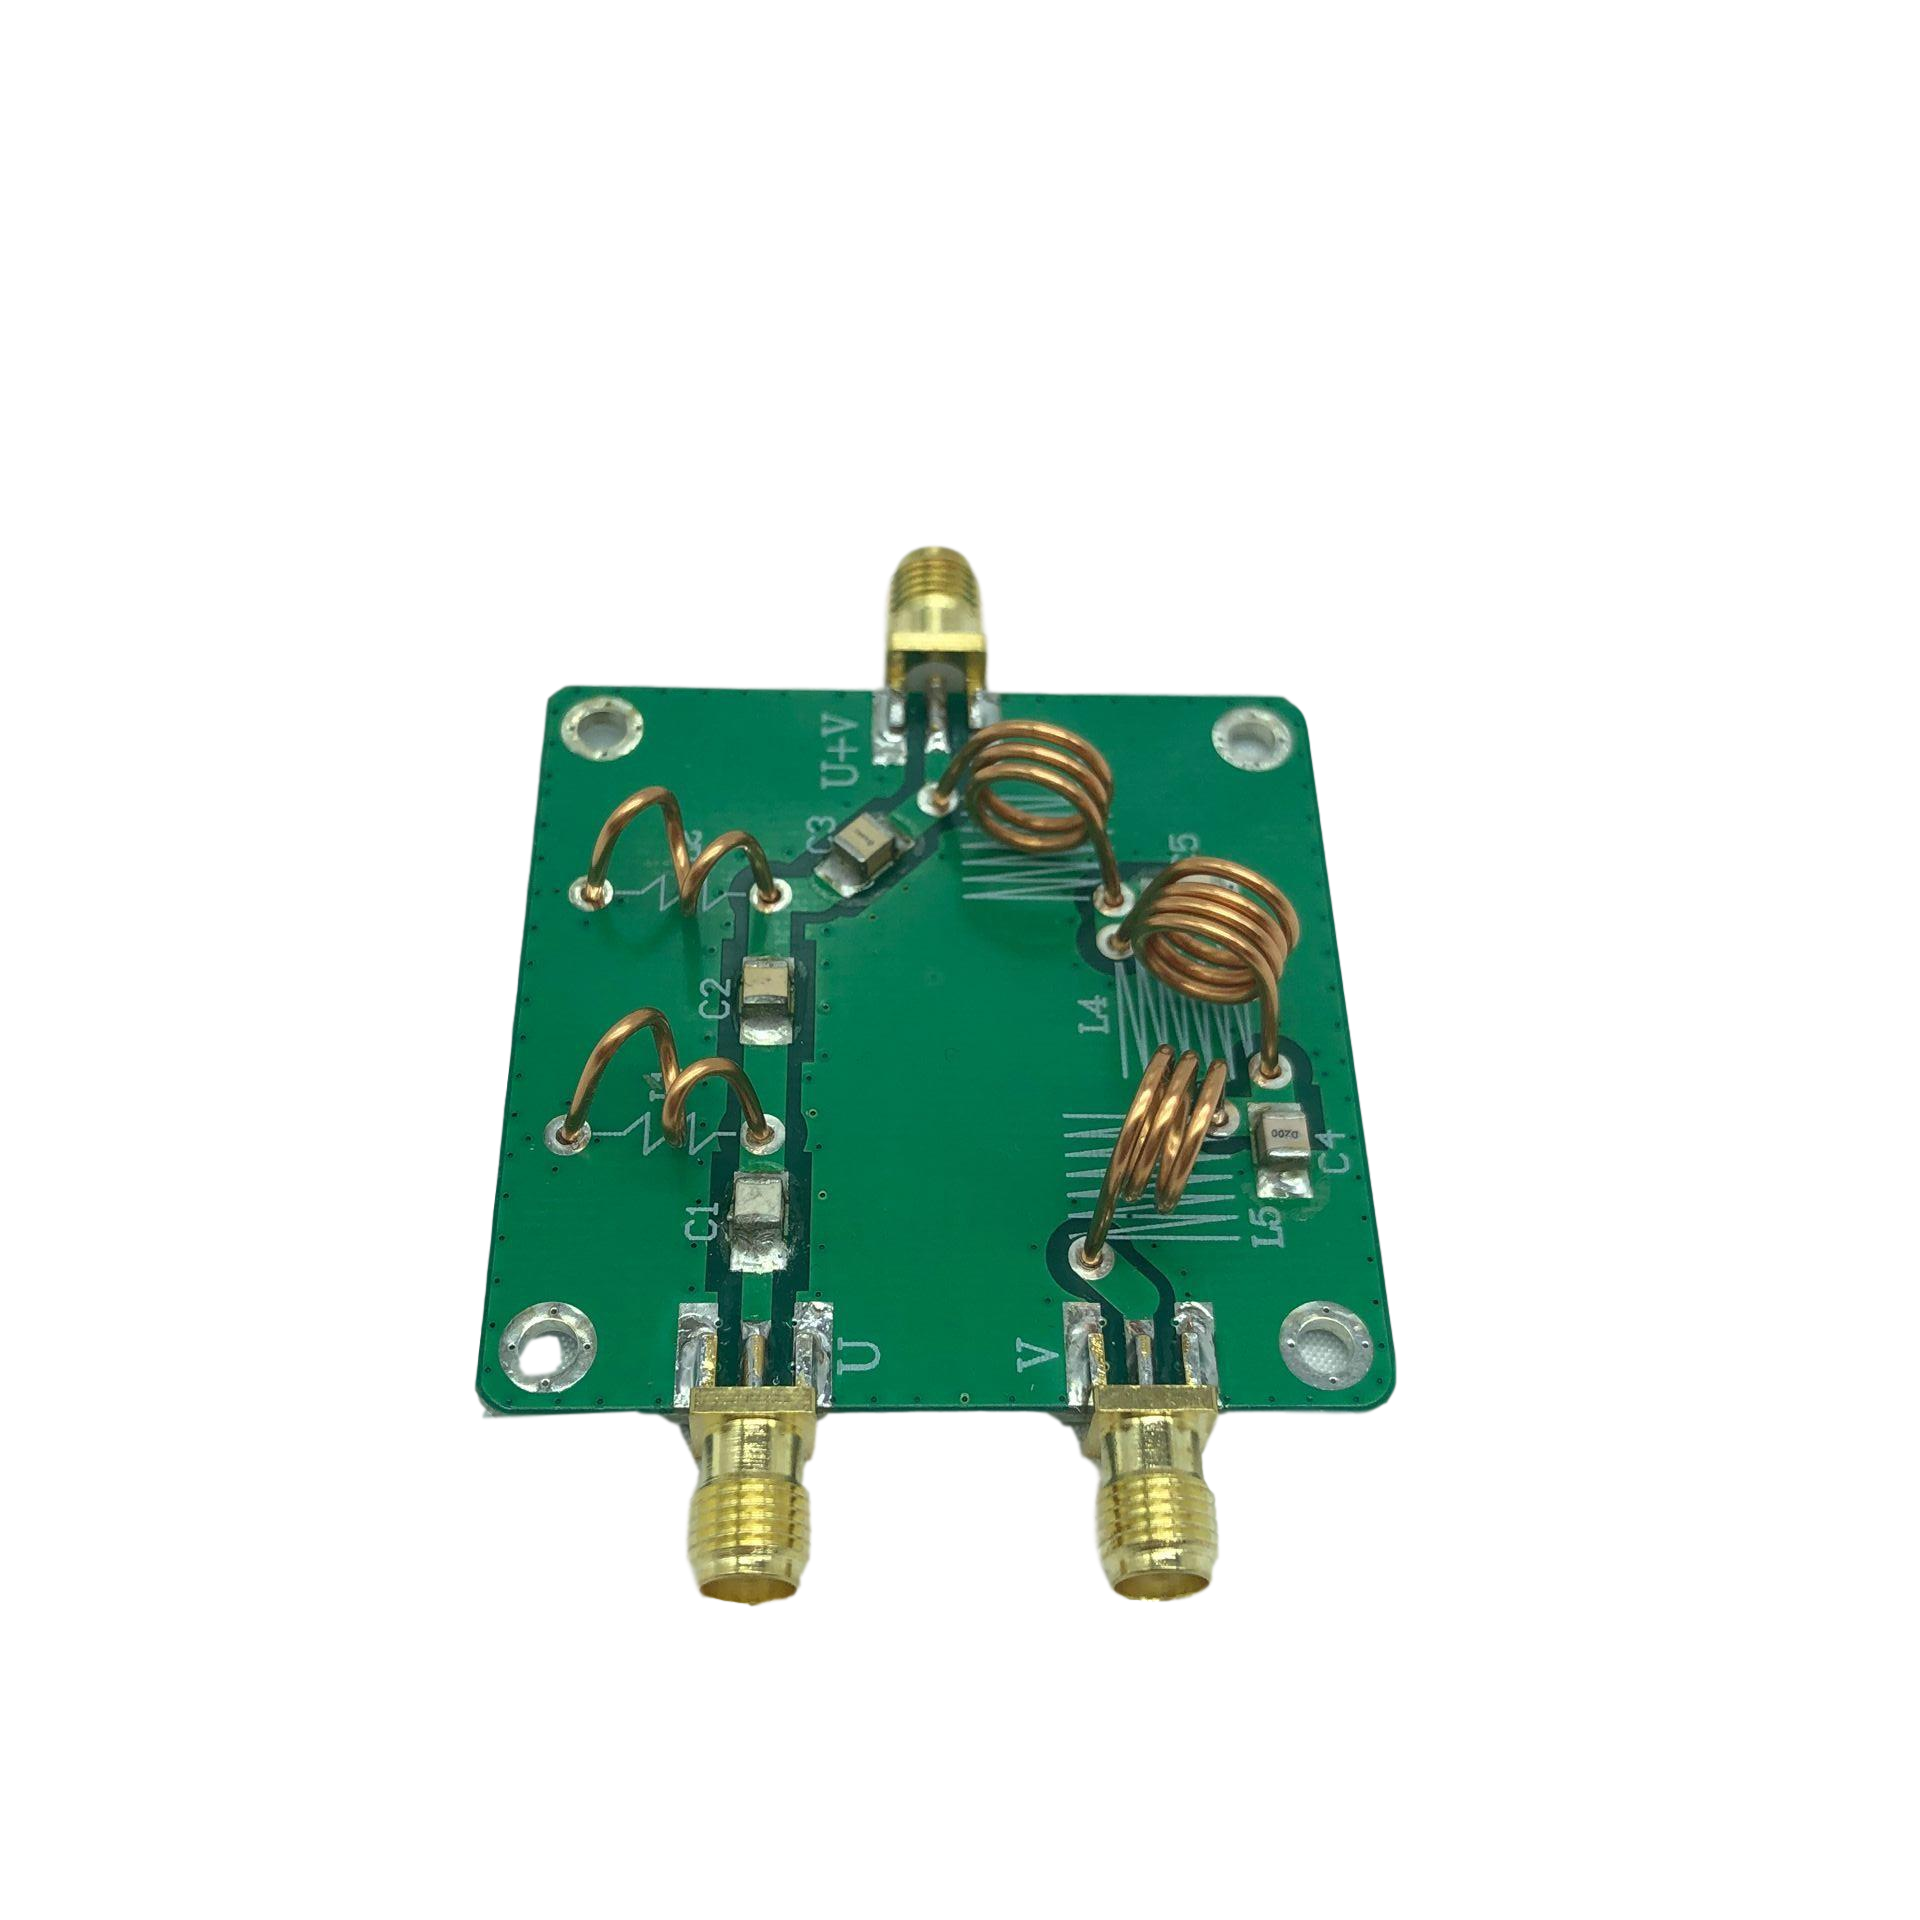 UV-Combiner-UV-Splitter-LC-Filter-Antenna-Combiner-Board-Passive-Module-1800190-4